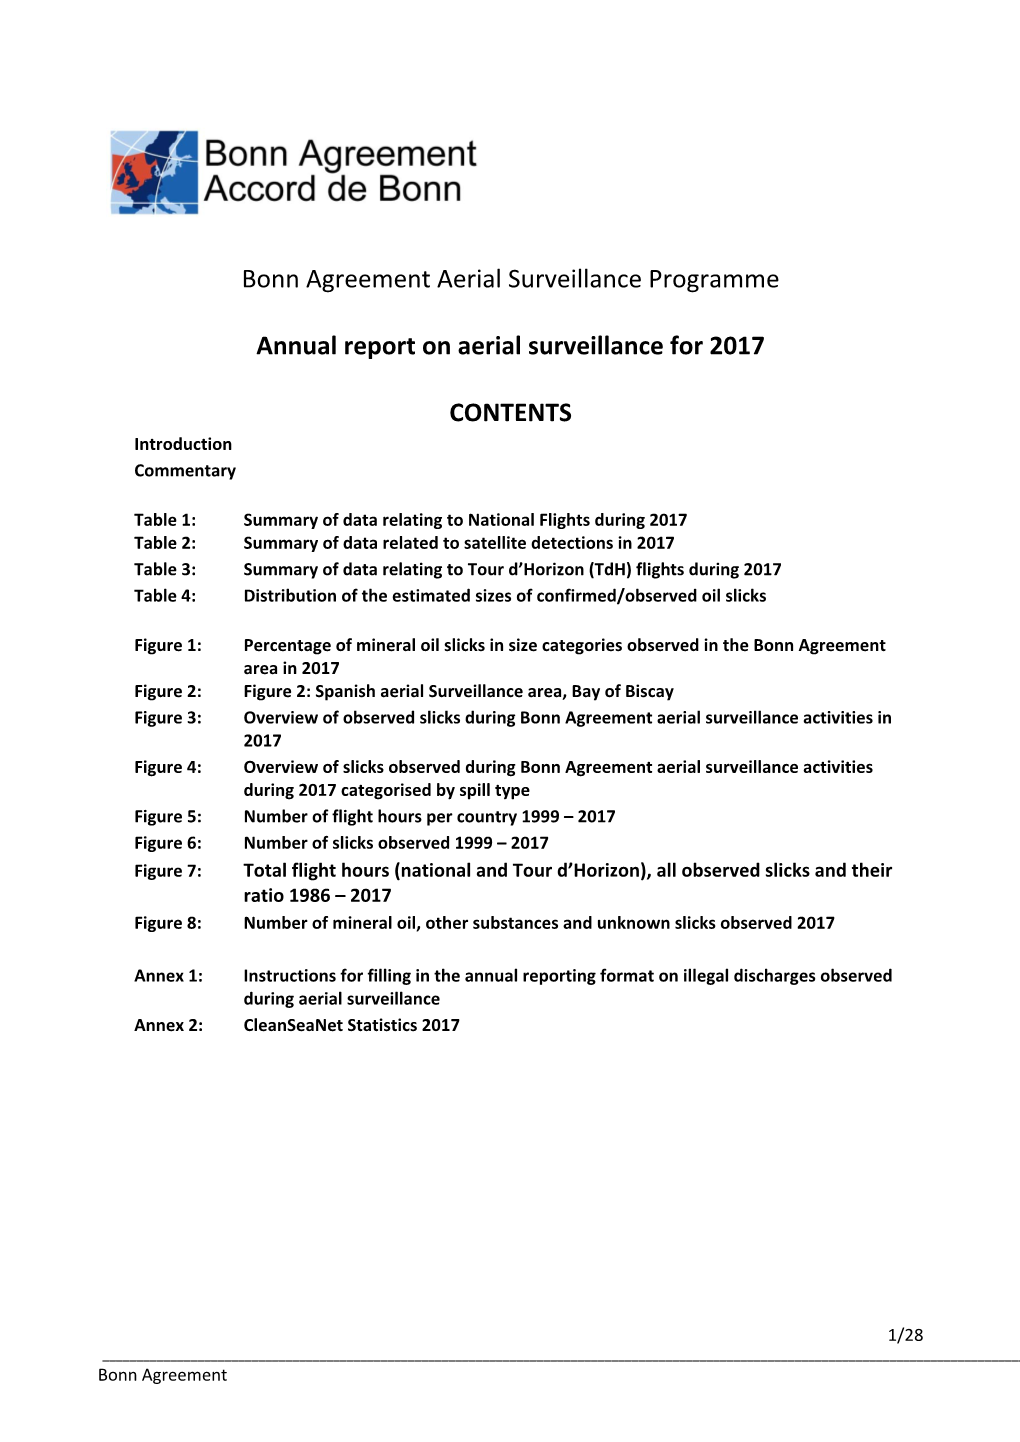 Bonn Agreement Annual Report on Aerial Surveillance: 2017